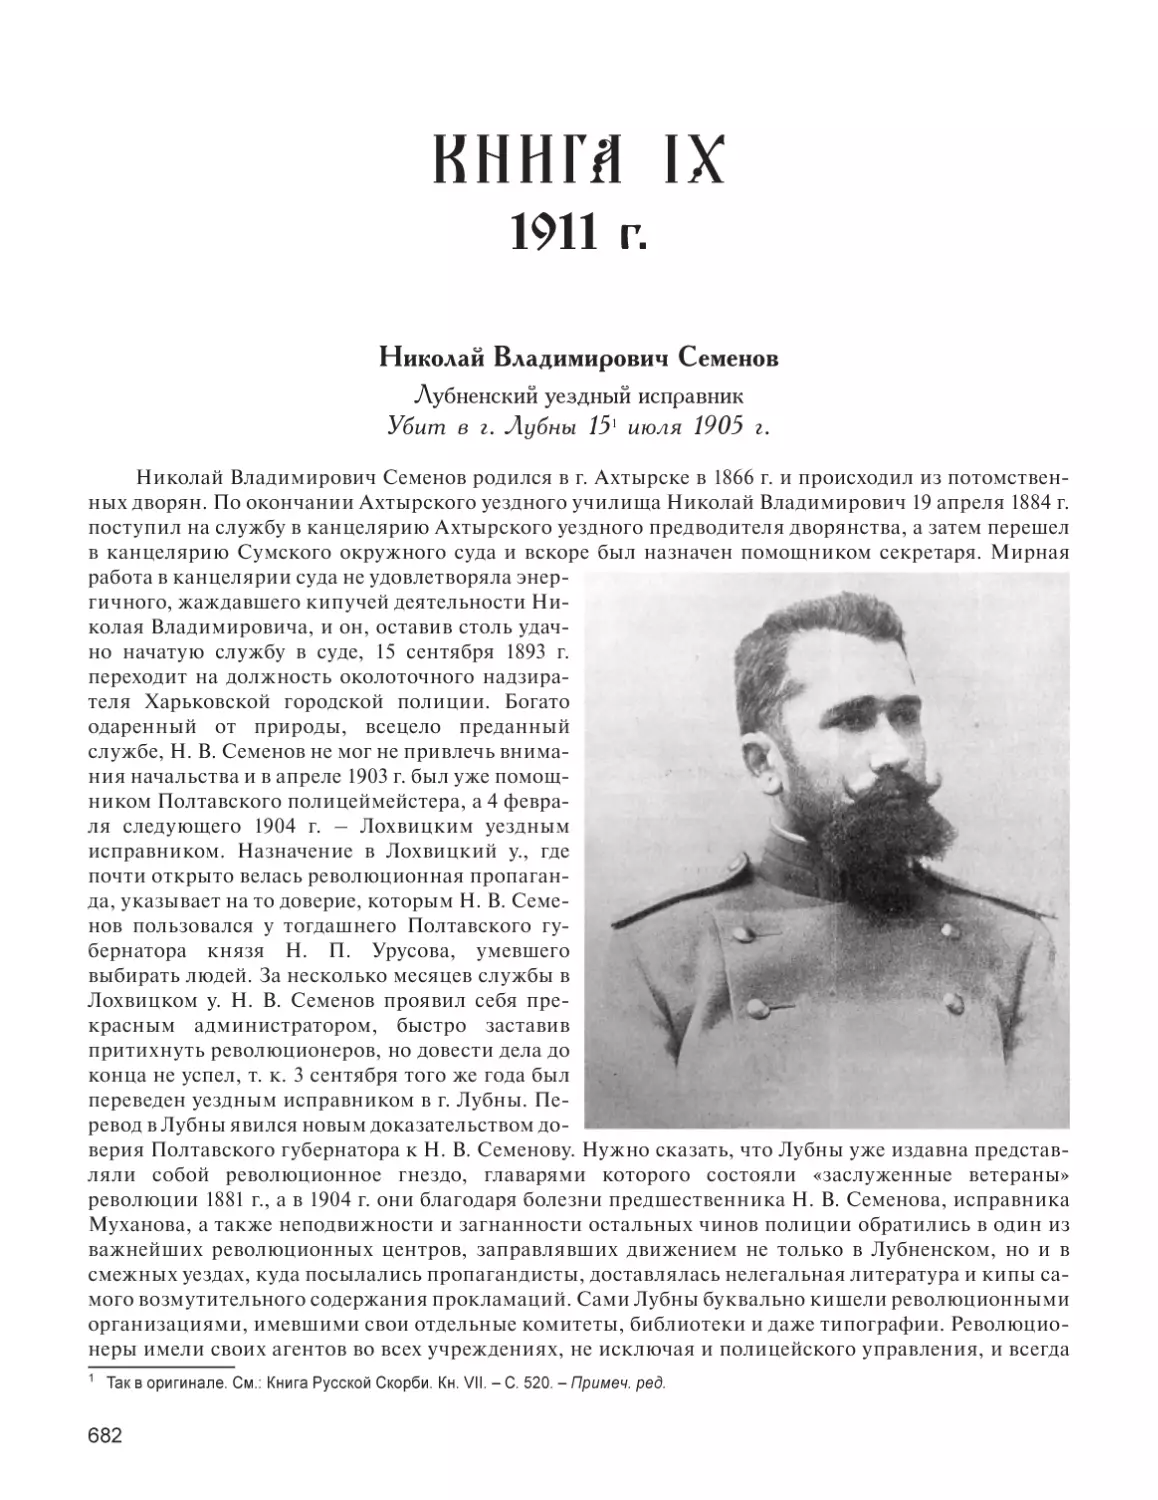 КНИГА IХ. 1911 г.